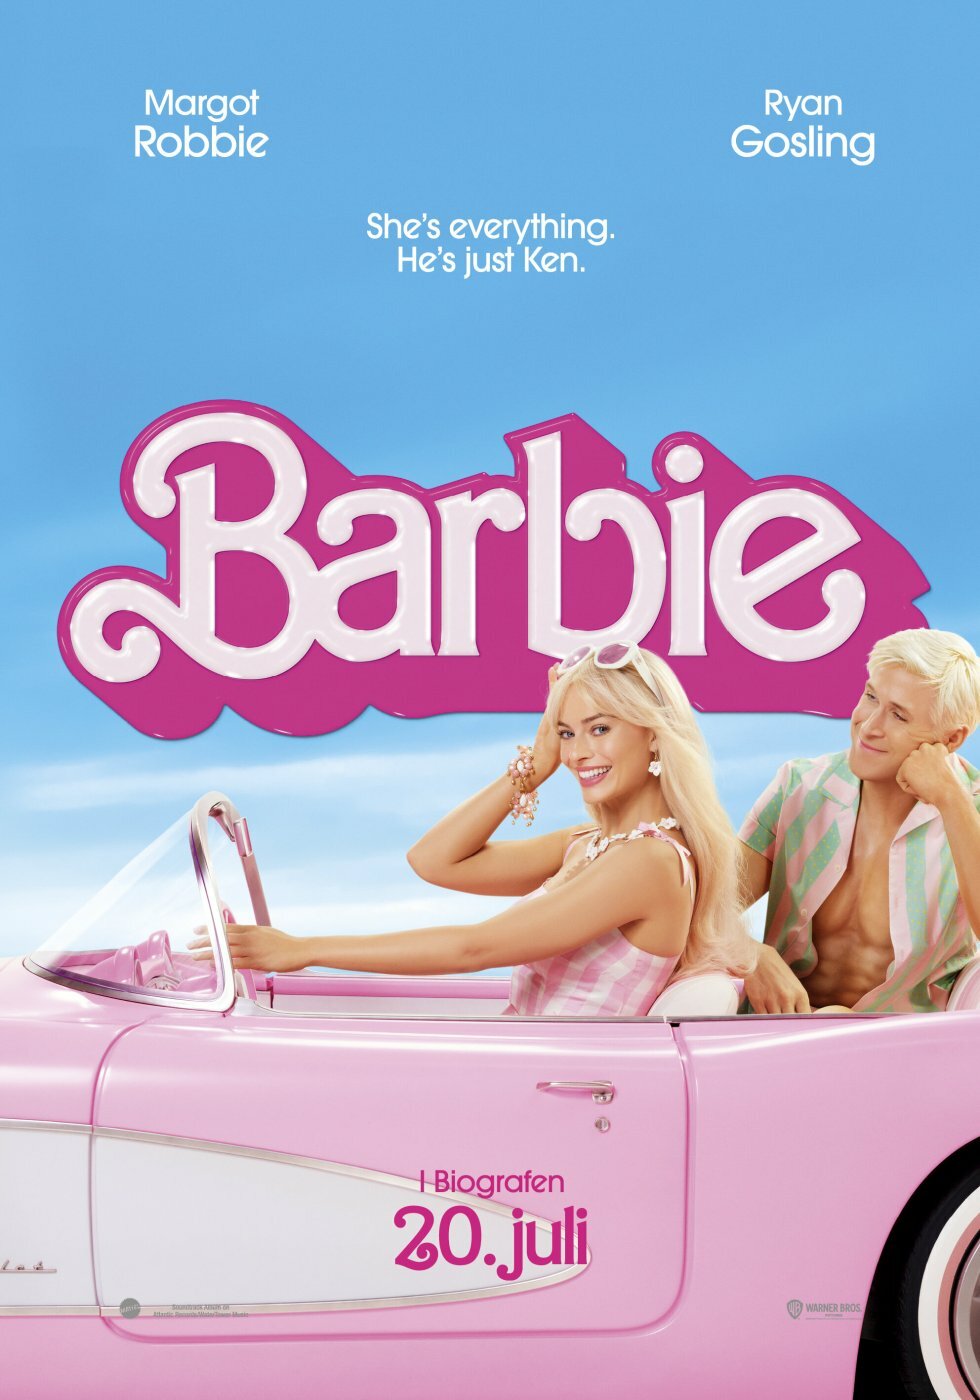 Anmeldelse: Barbie